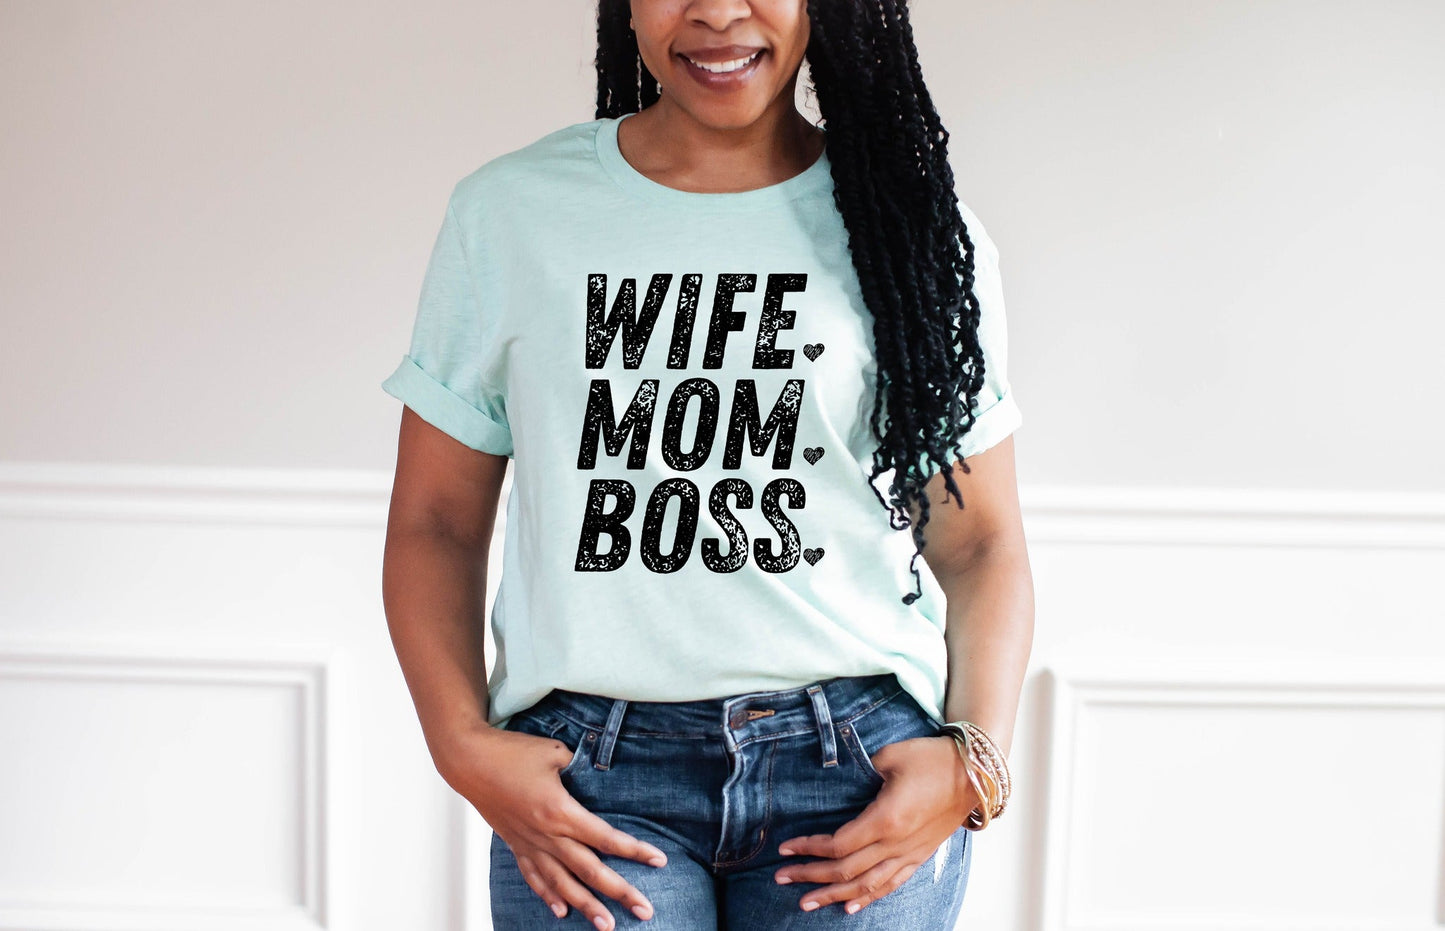 Wife.Mom.Boss